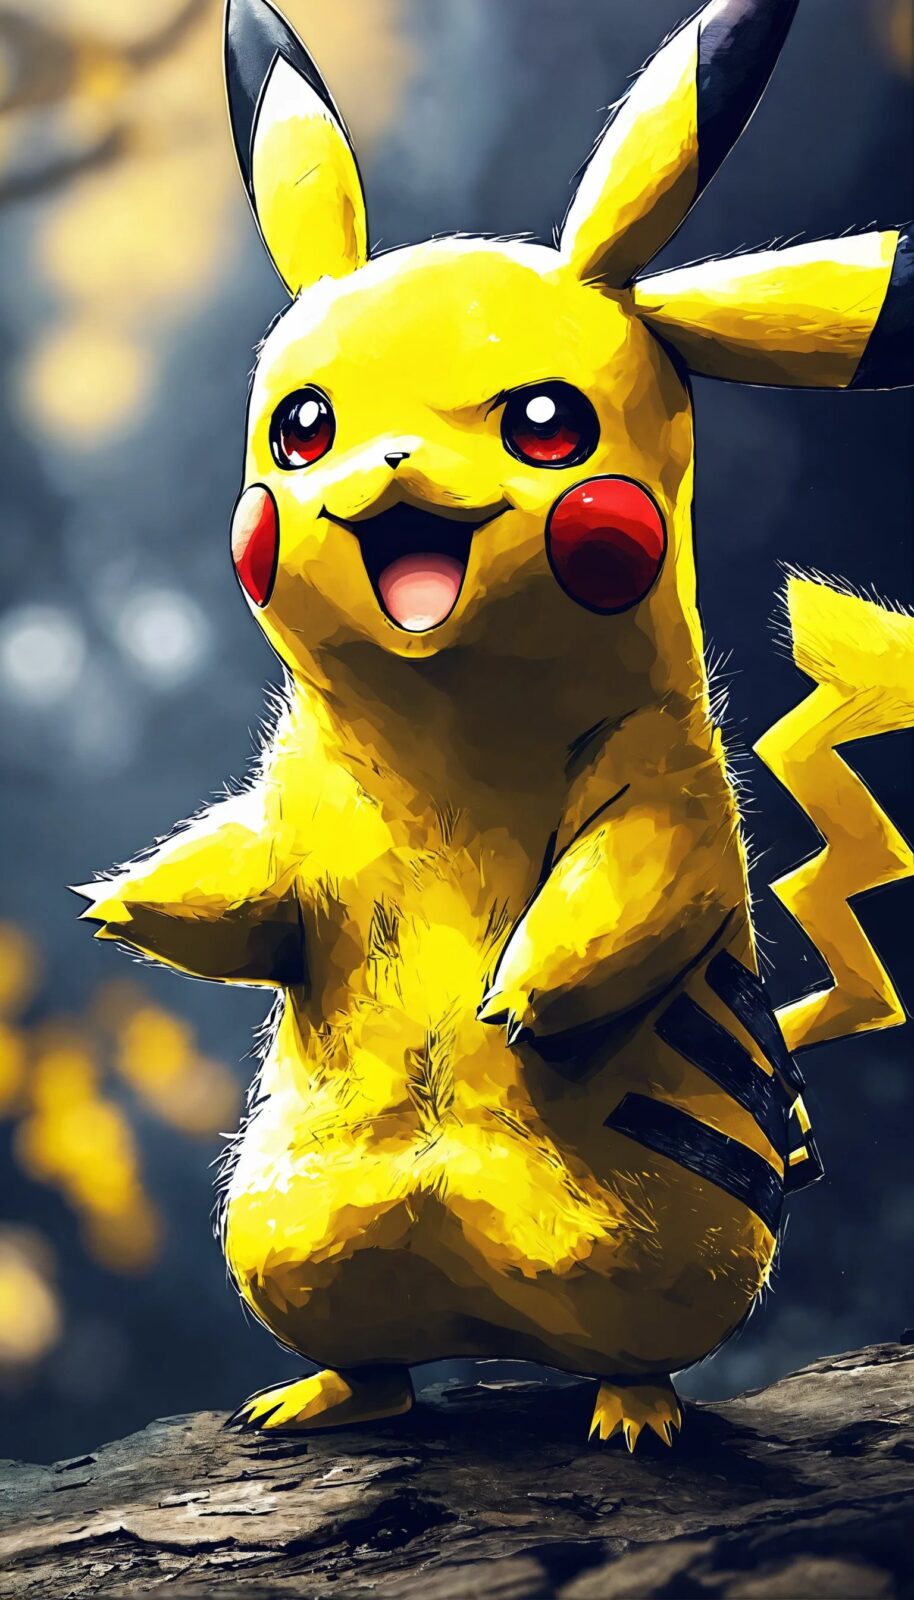 Pikachu iPhone Wallpaper 4K | Free Download